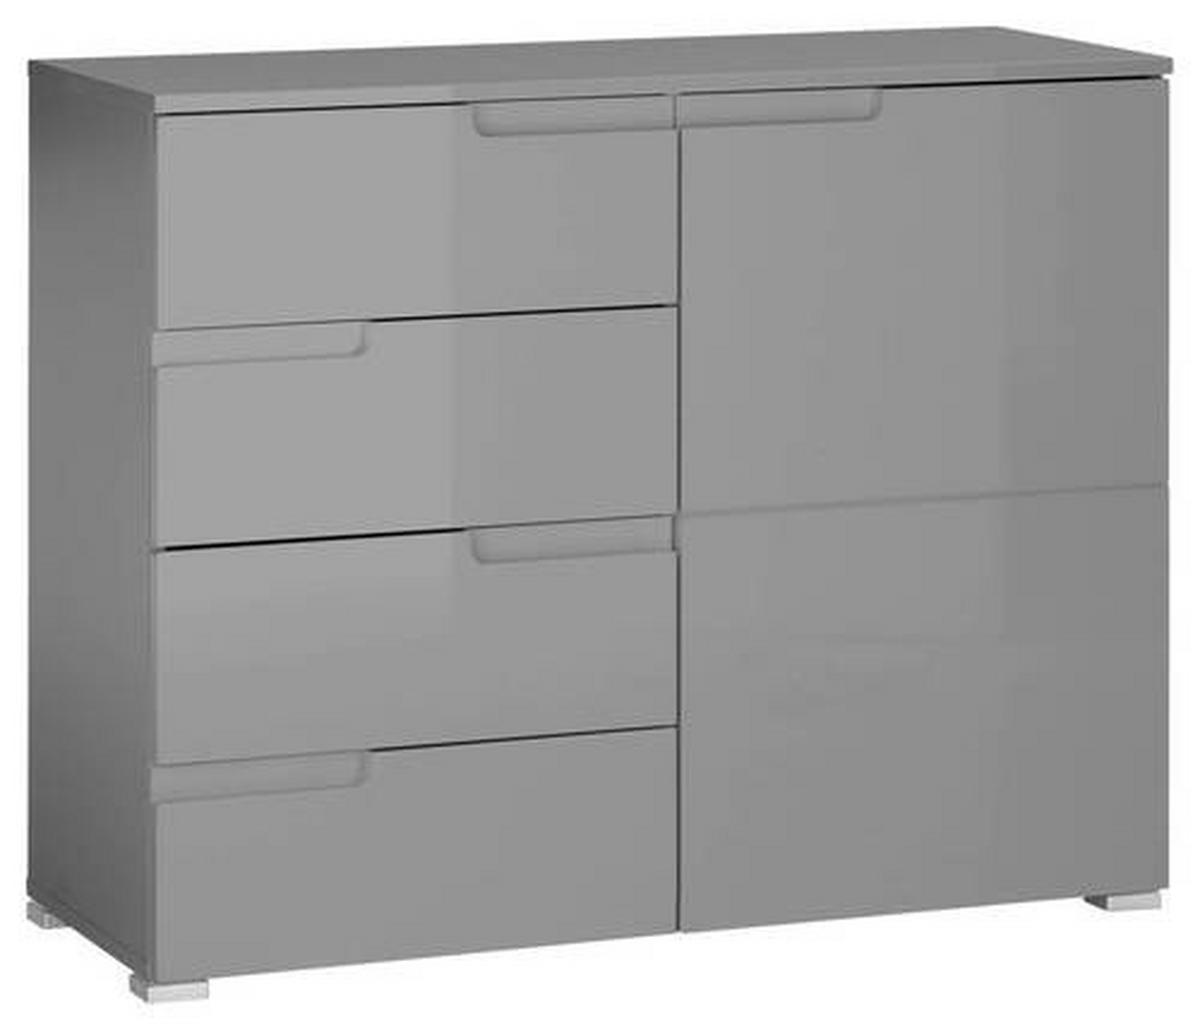 KOMMODE 100/80/40 cm  - Silberfarben/Grau, Basics, Holzwerkstoff/Kunststoff (100/80/40cm)